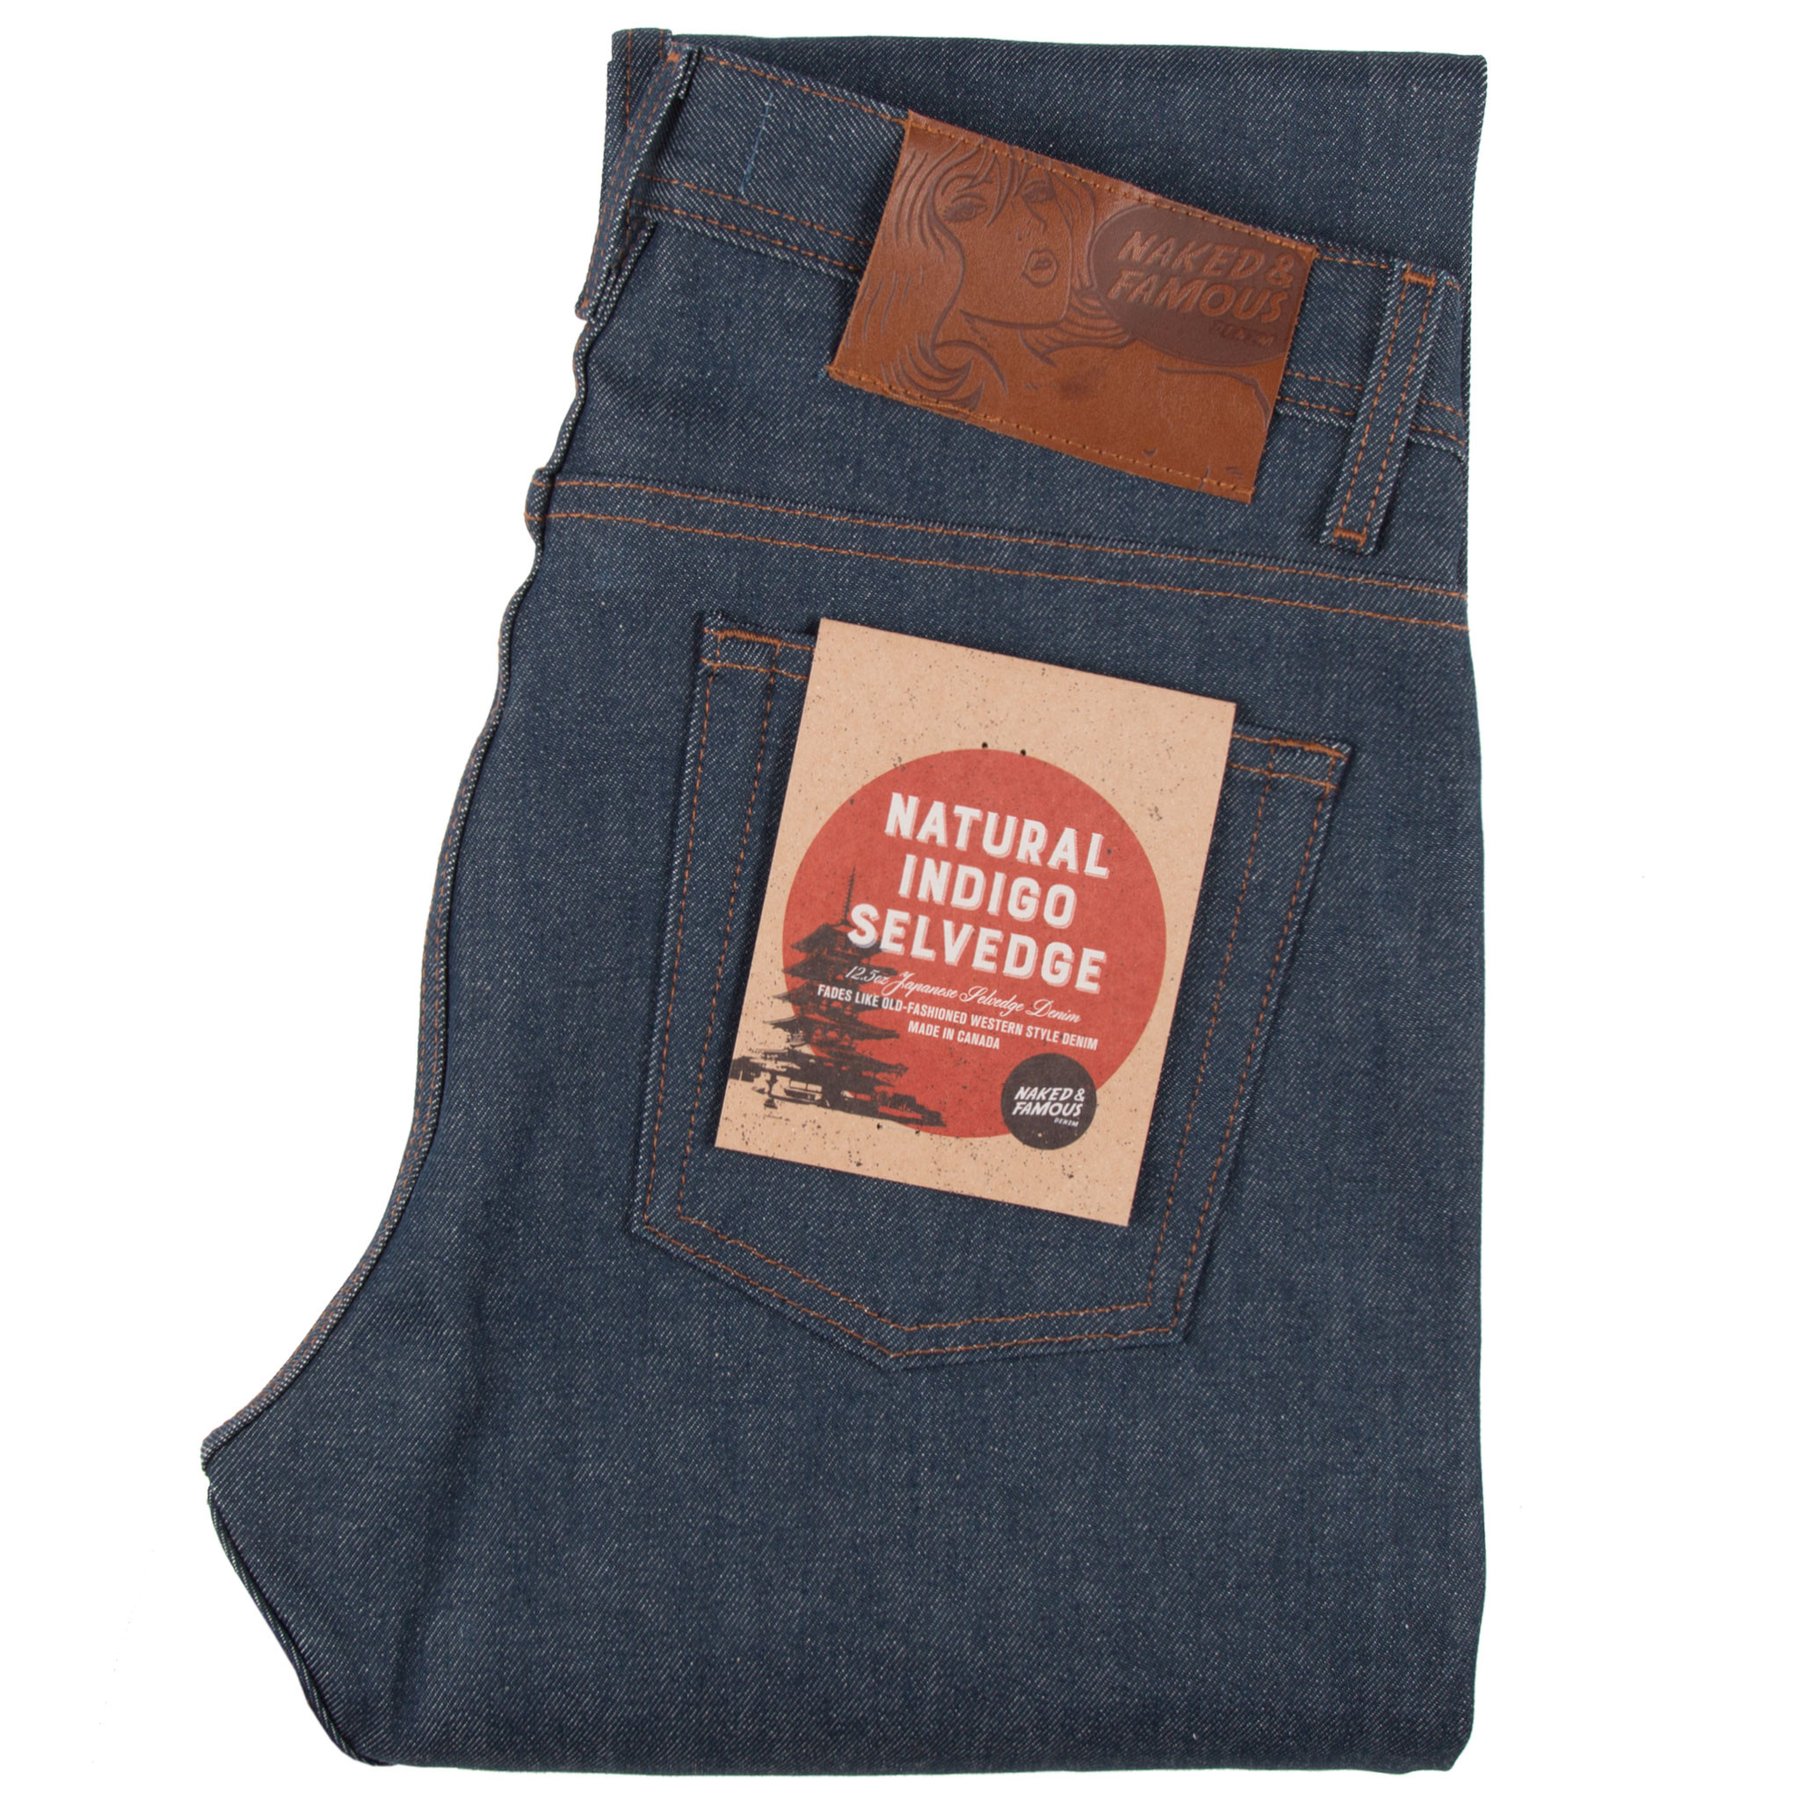  Natural Indigo Selvedge Jeans Folded 